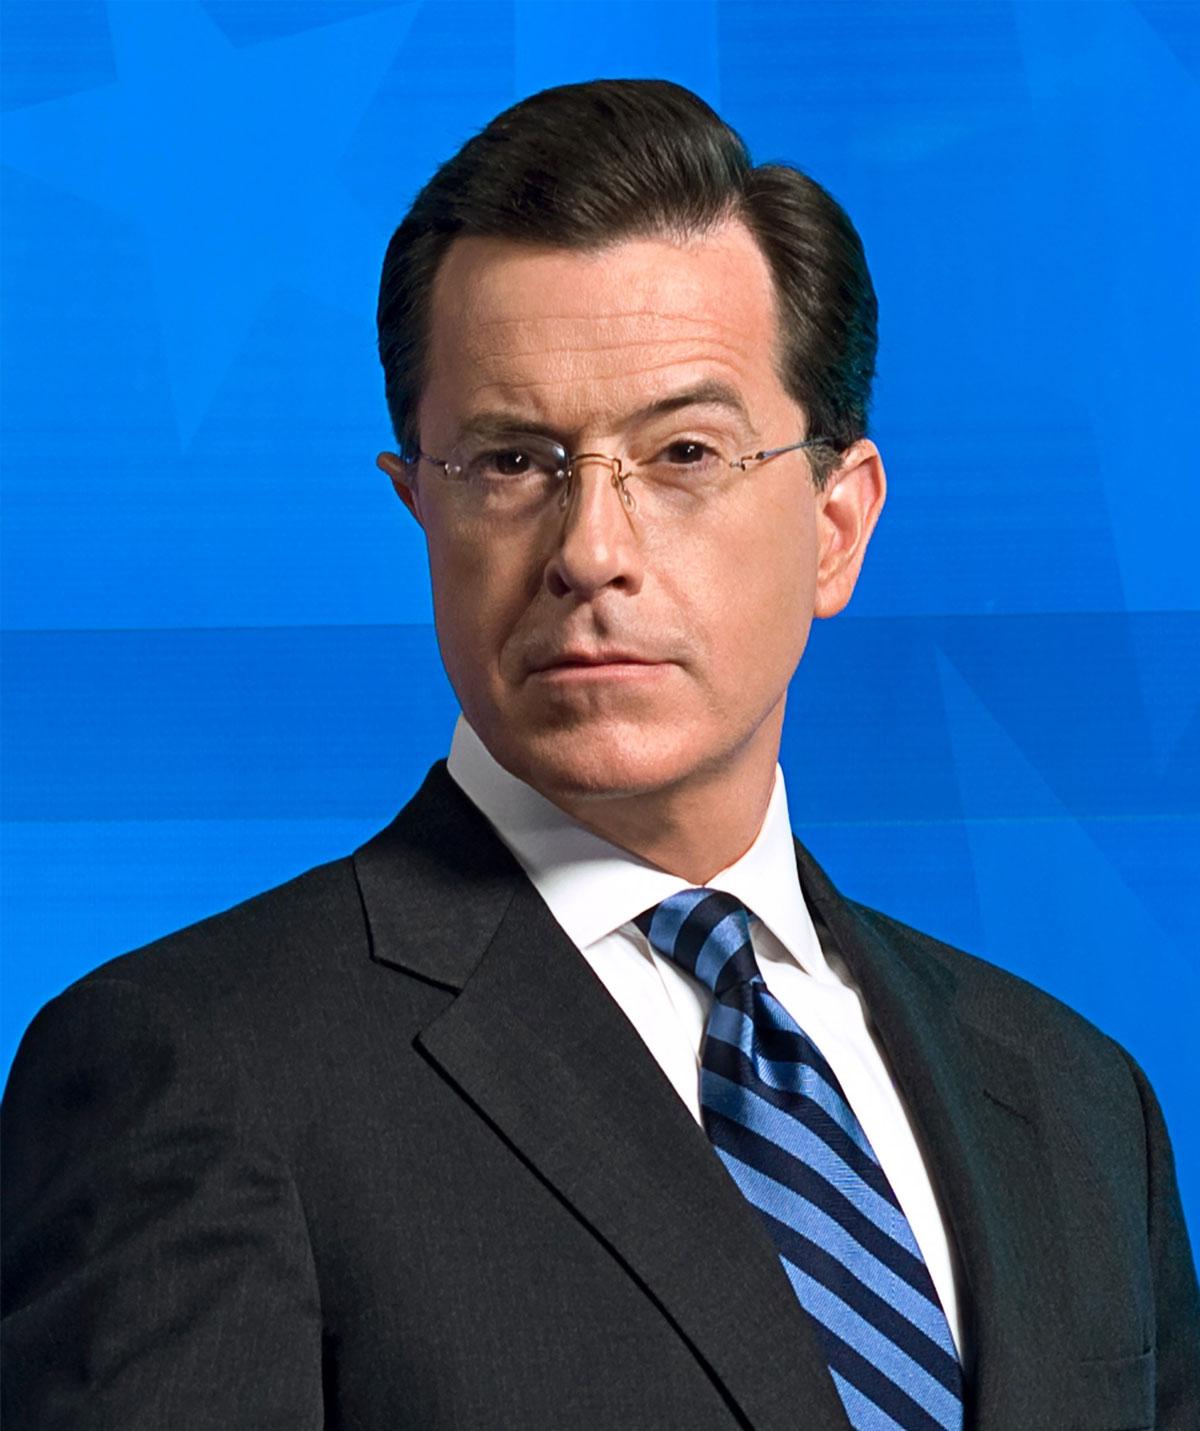 New Stephen Colbert Photo View Wallpaper